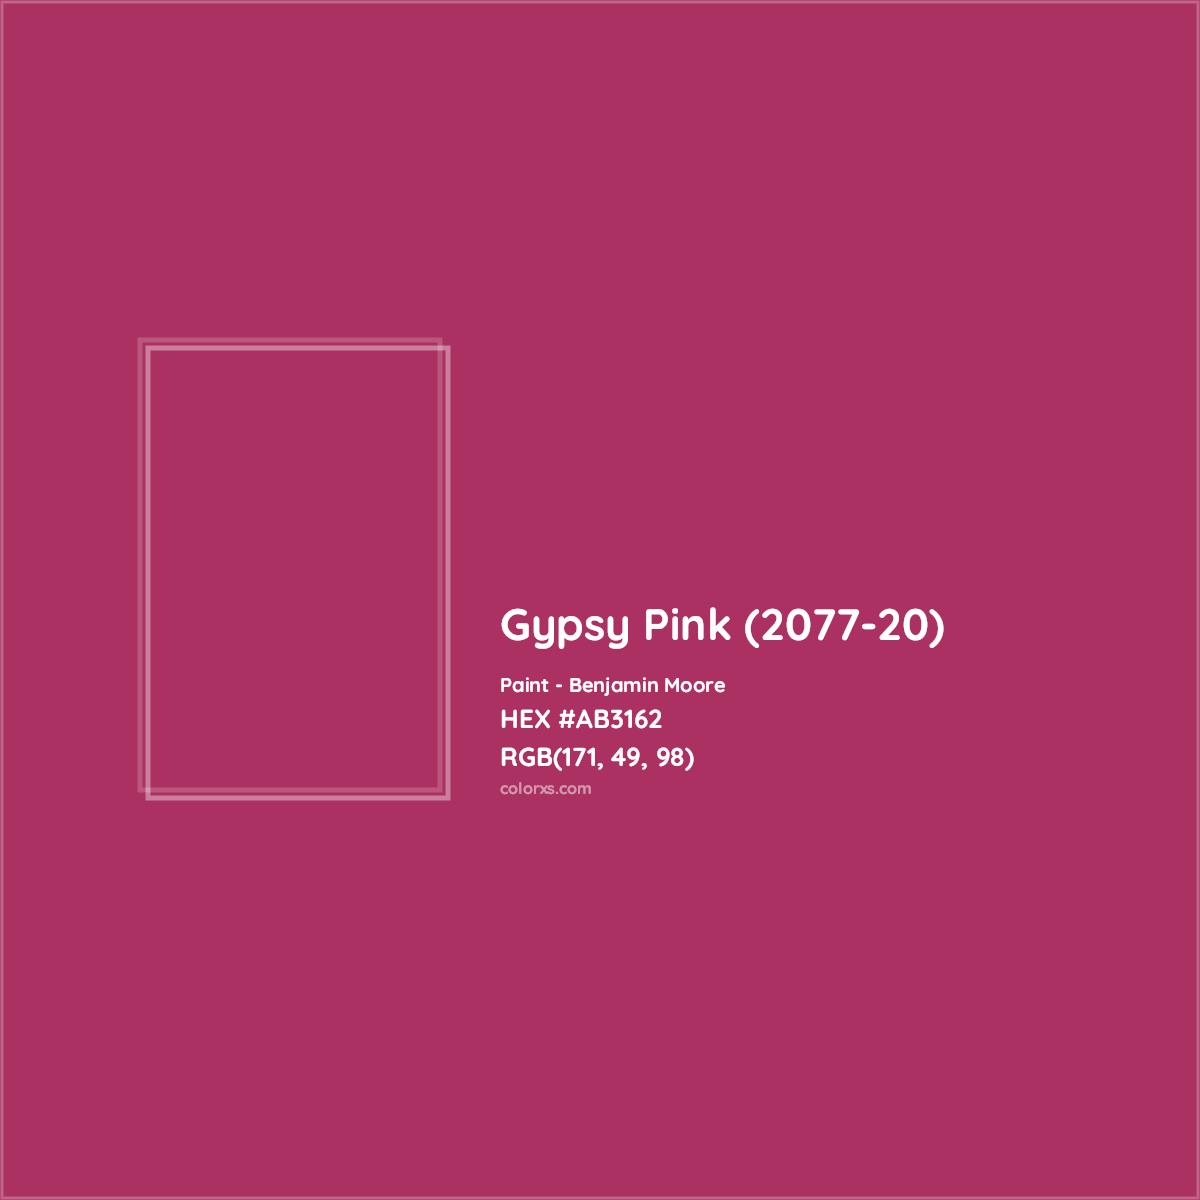 HEX #AB3162 Gypsy Pink (2077-20) Paint Benjamin Moore - Color Code